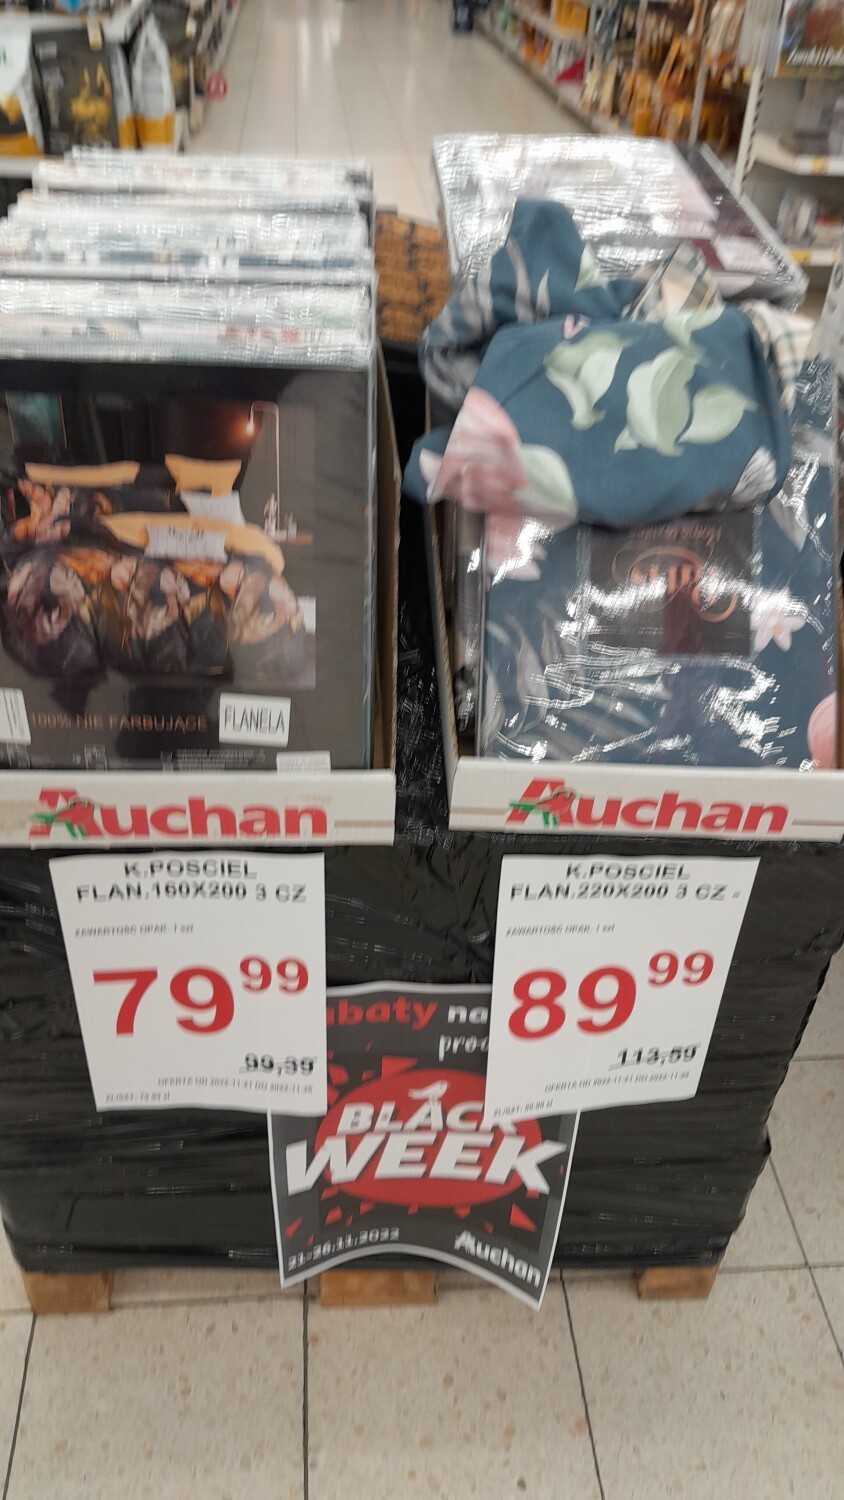 Black Week 2022 w Auchan - zdjęcia